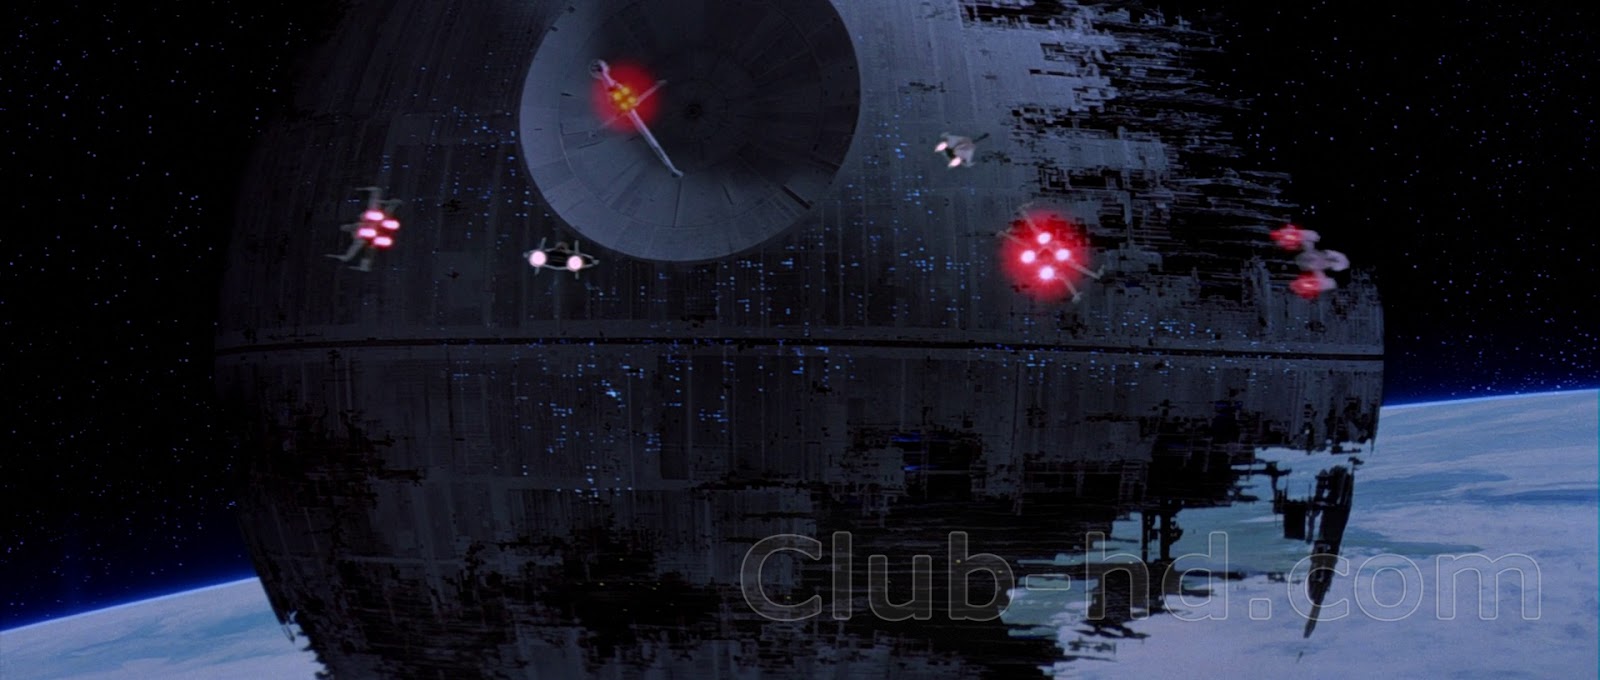 Star Wars Episode VI: Return of the Jedi (1983) 1080p BDRip Dual Latino-Inglés [Subt. Esp-Ing] (Ciencia ficción. Aventura)